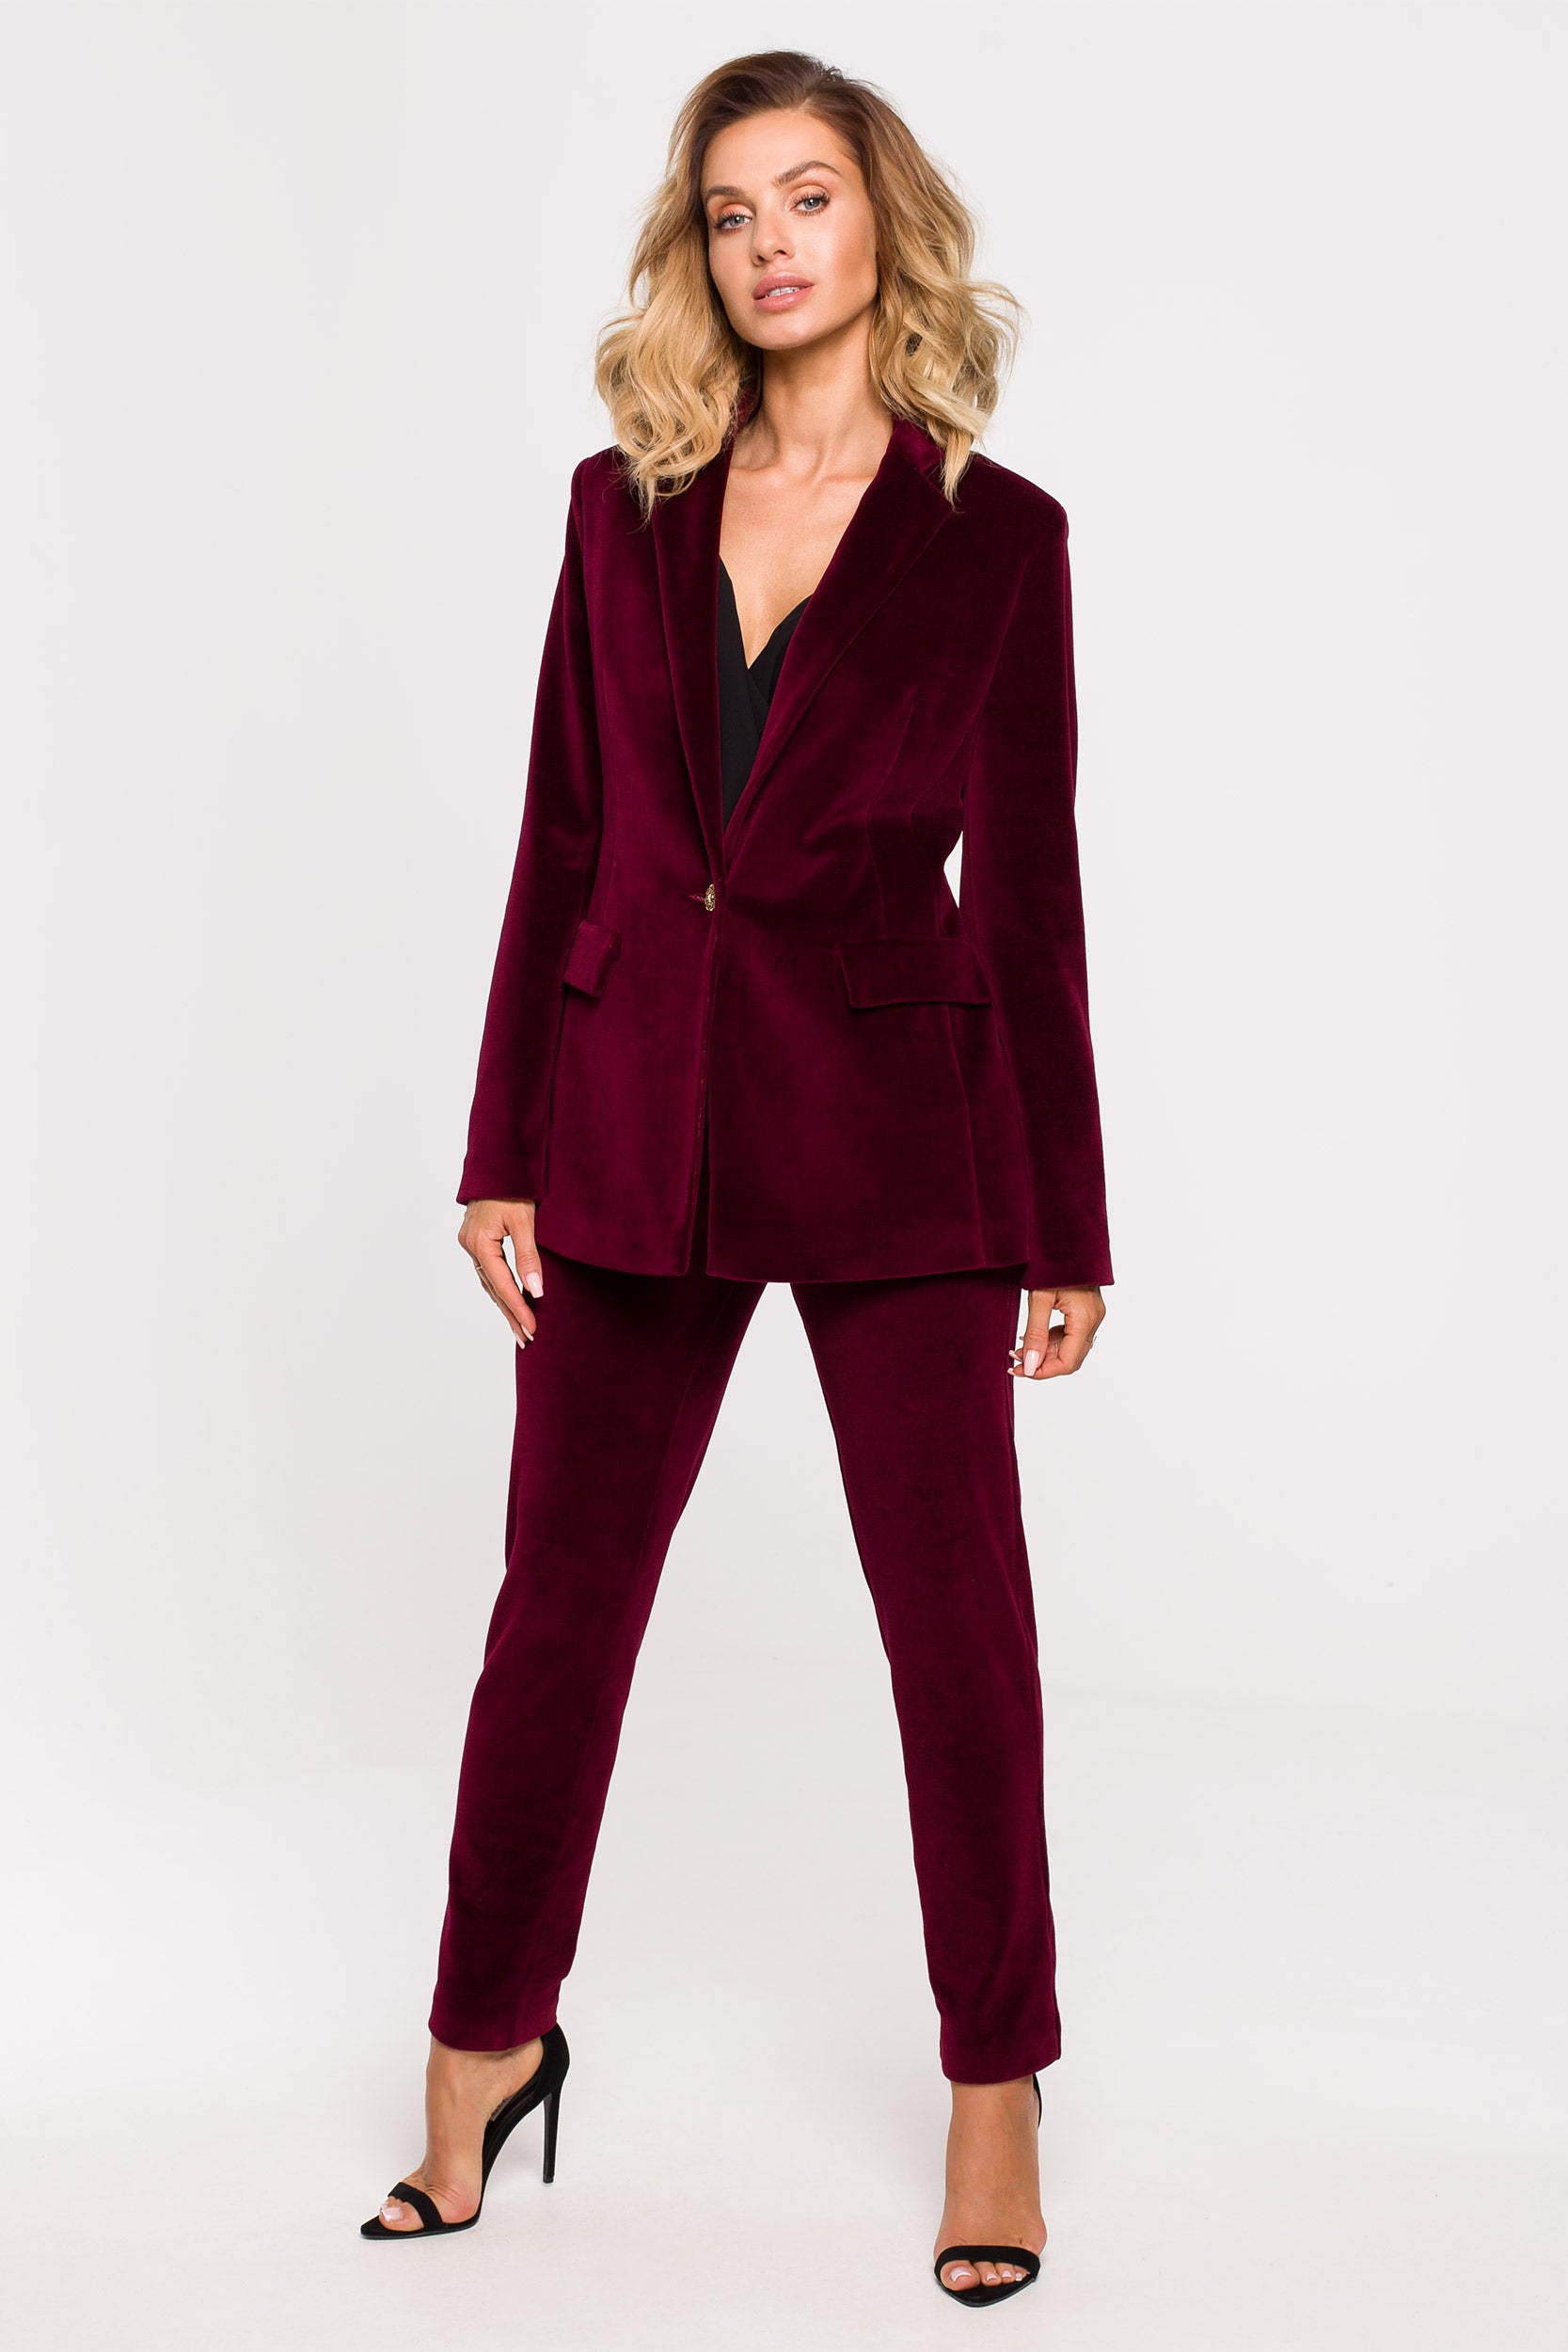 Women Velvet Luxury 2 Piece Suit in Red Color With Slim Fit Trouser  Included Black Satin Lapel Tuxedo Collar. - Etsy | Tuxedo women, Velvet  clothes, Suits for women